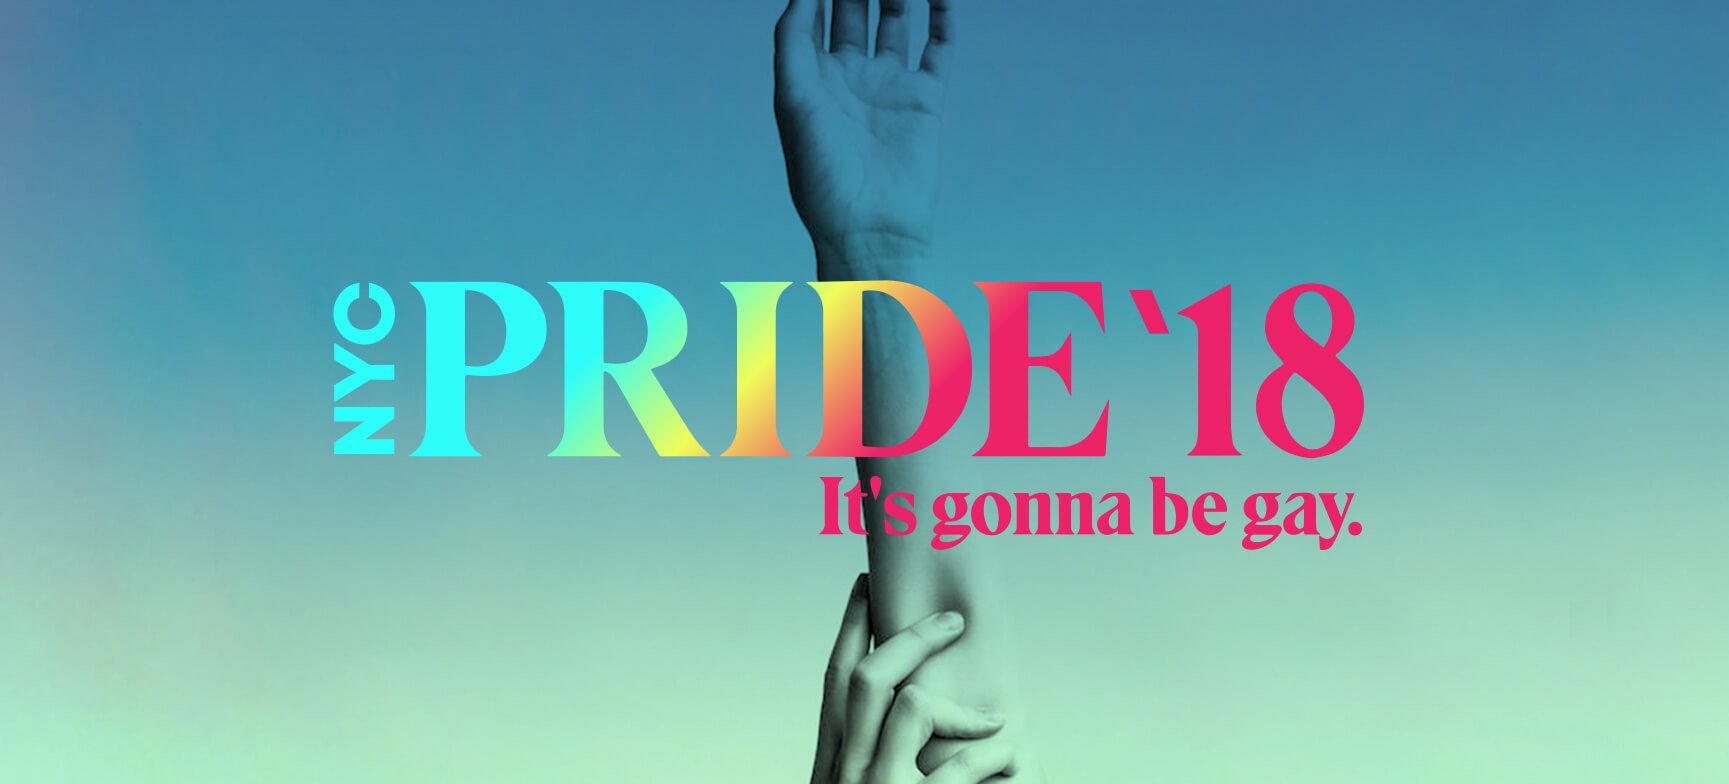 NYC Pride '18